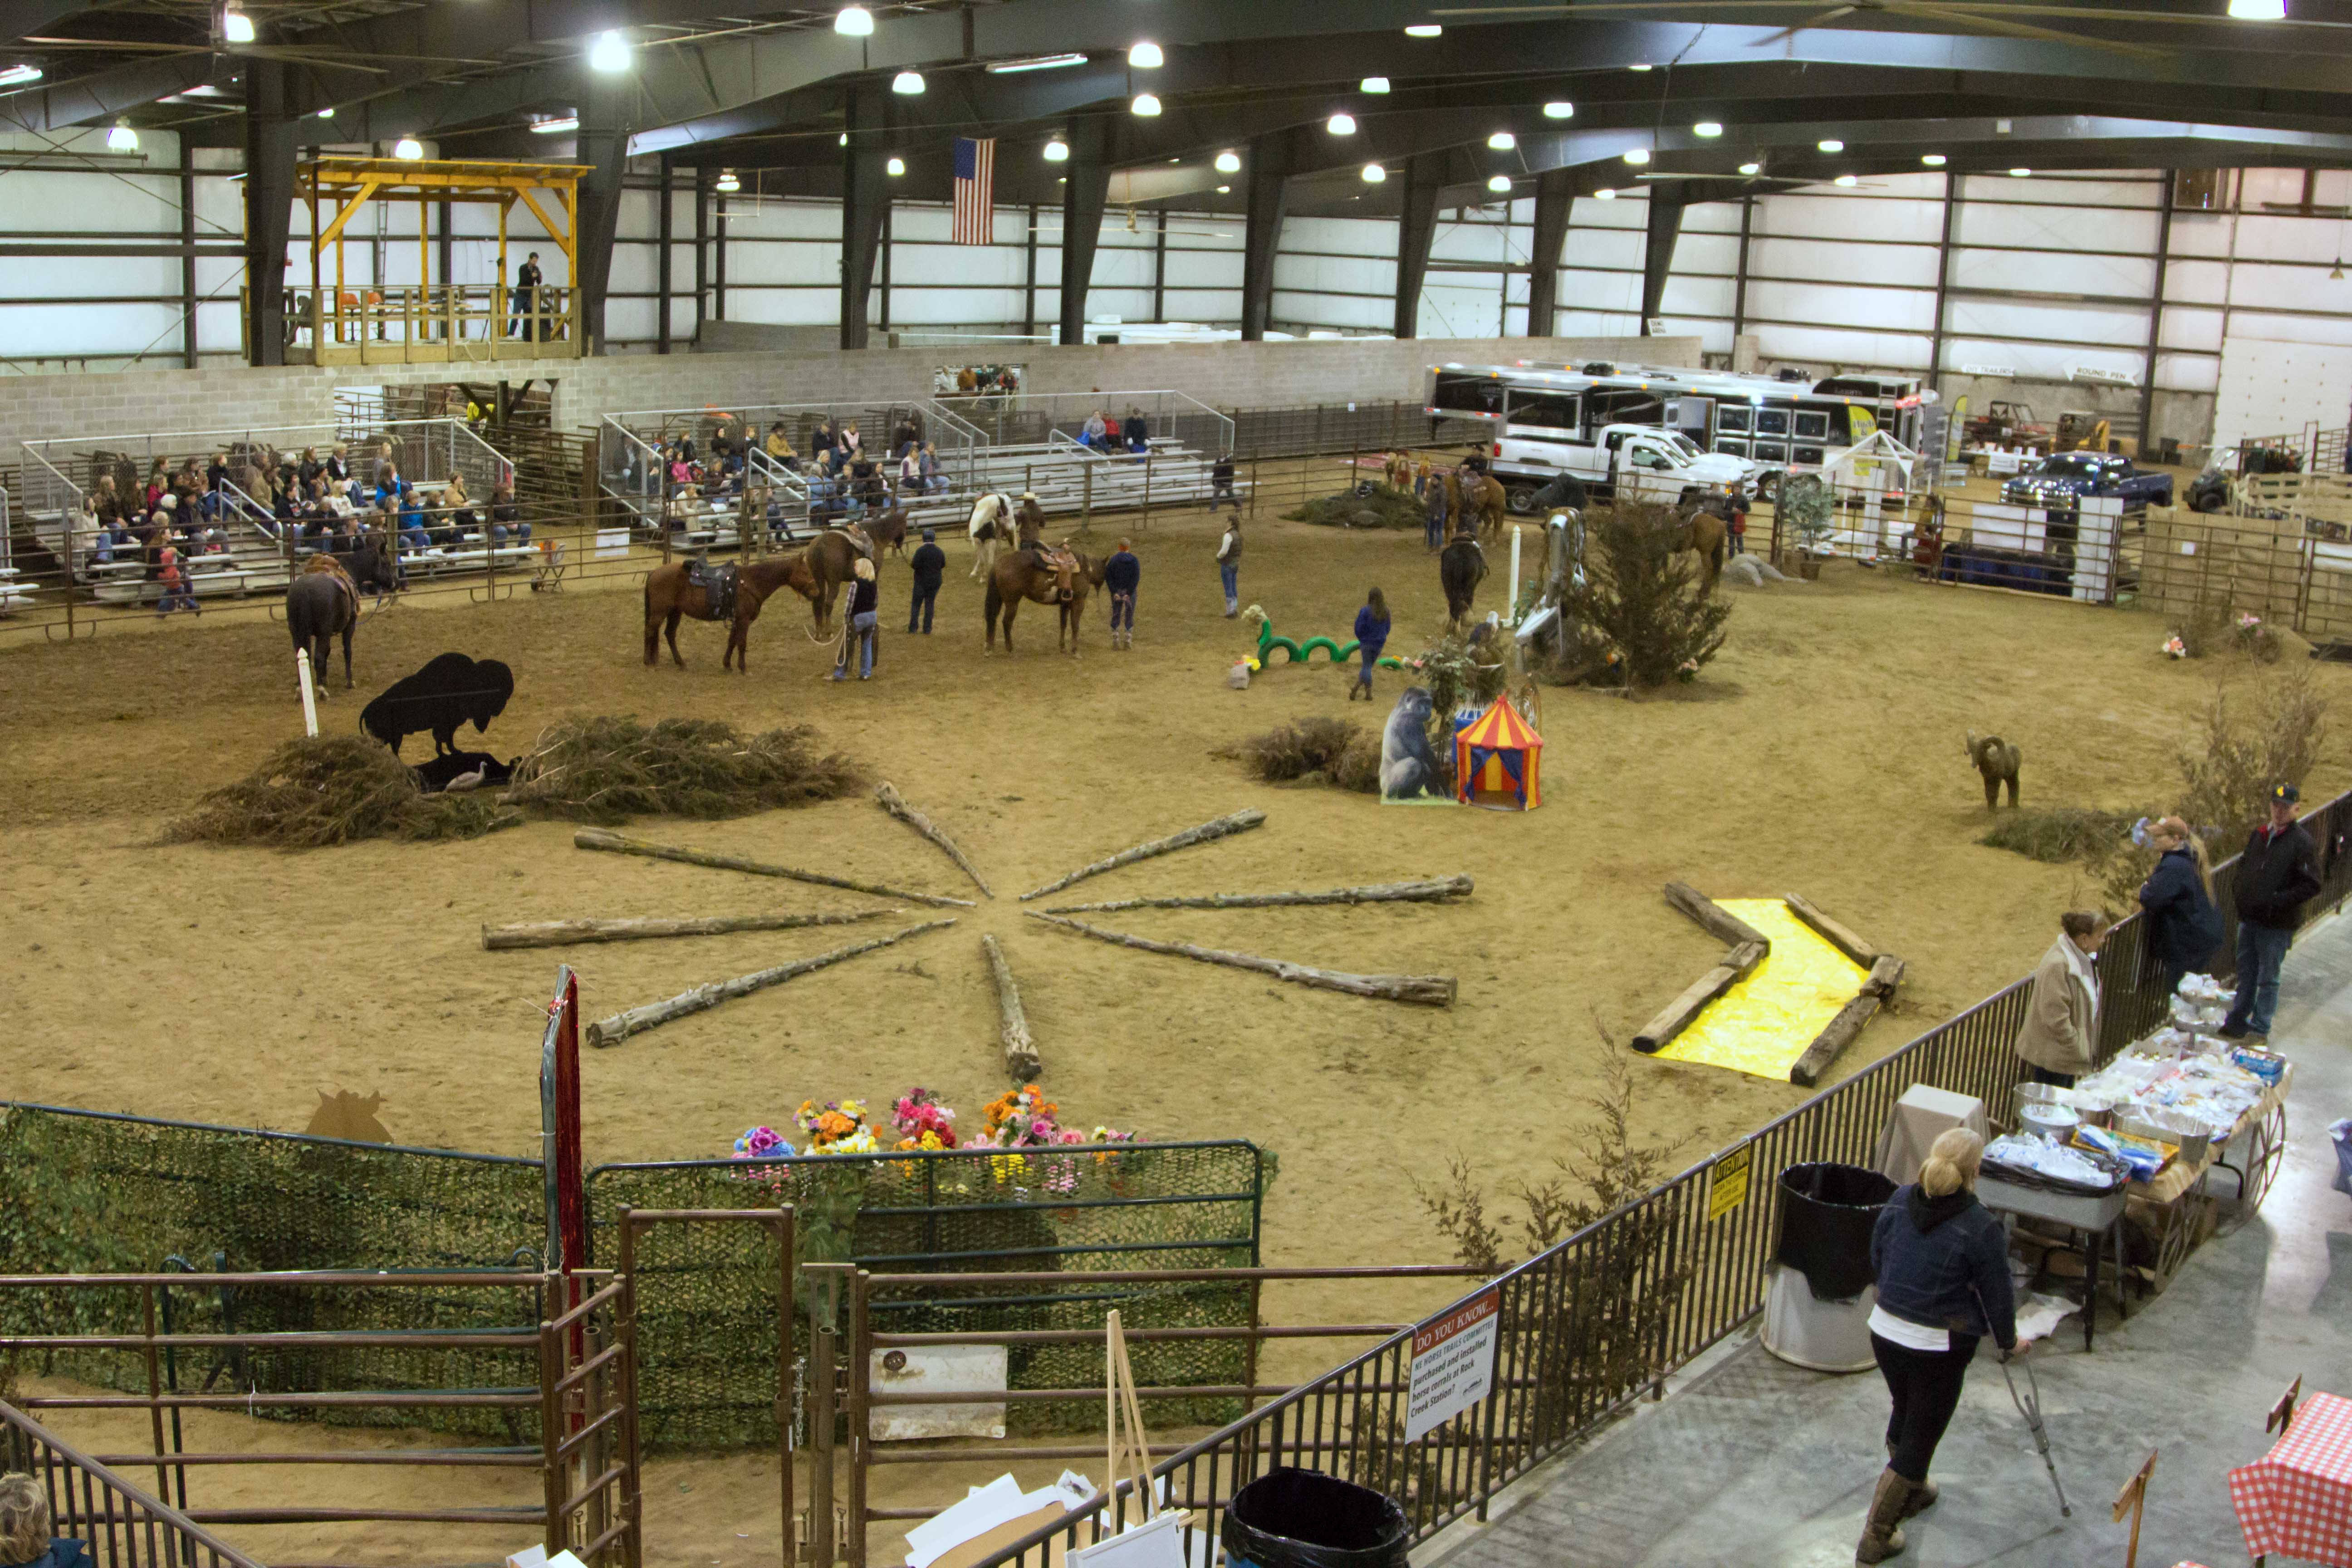 The Nebraska Horse Trails Committee, Inc. Expo Expo